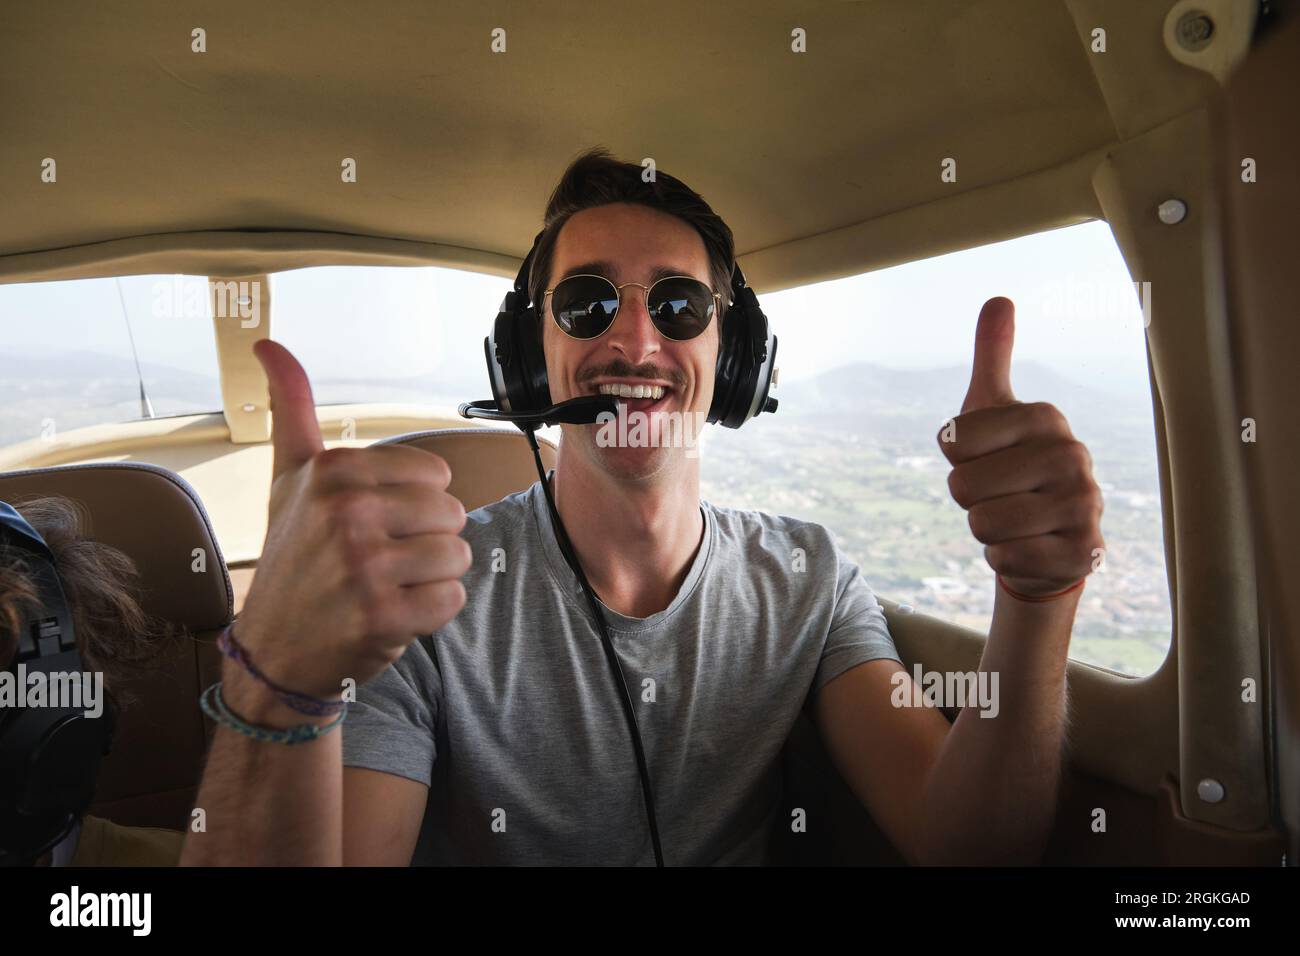 Stock photo of happy man wearing aviation headset enjoying light aircraft tour and looking at camera. Stock Photo